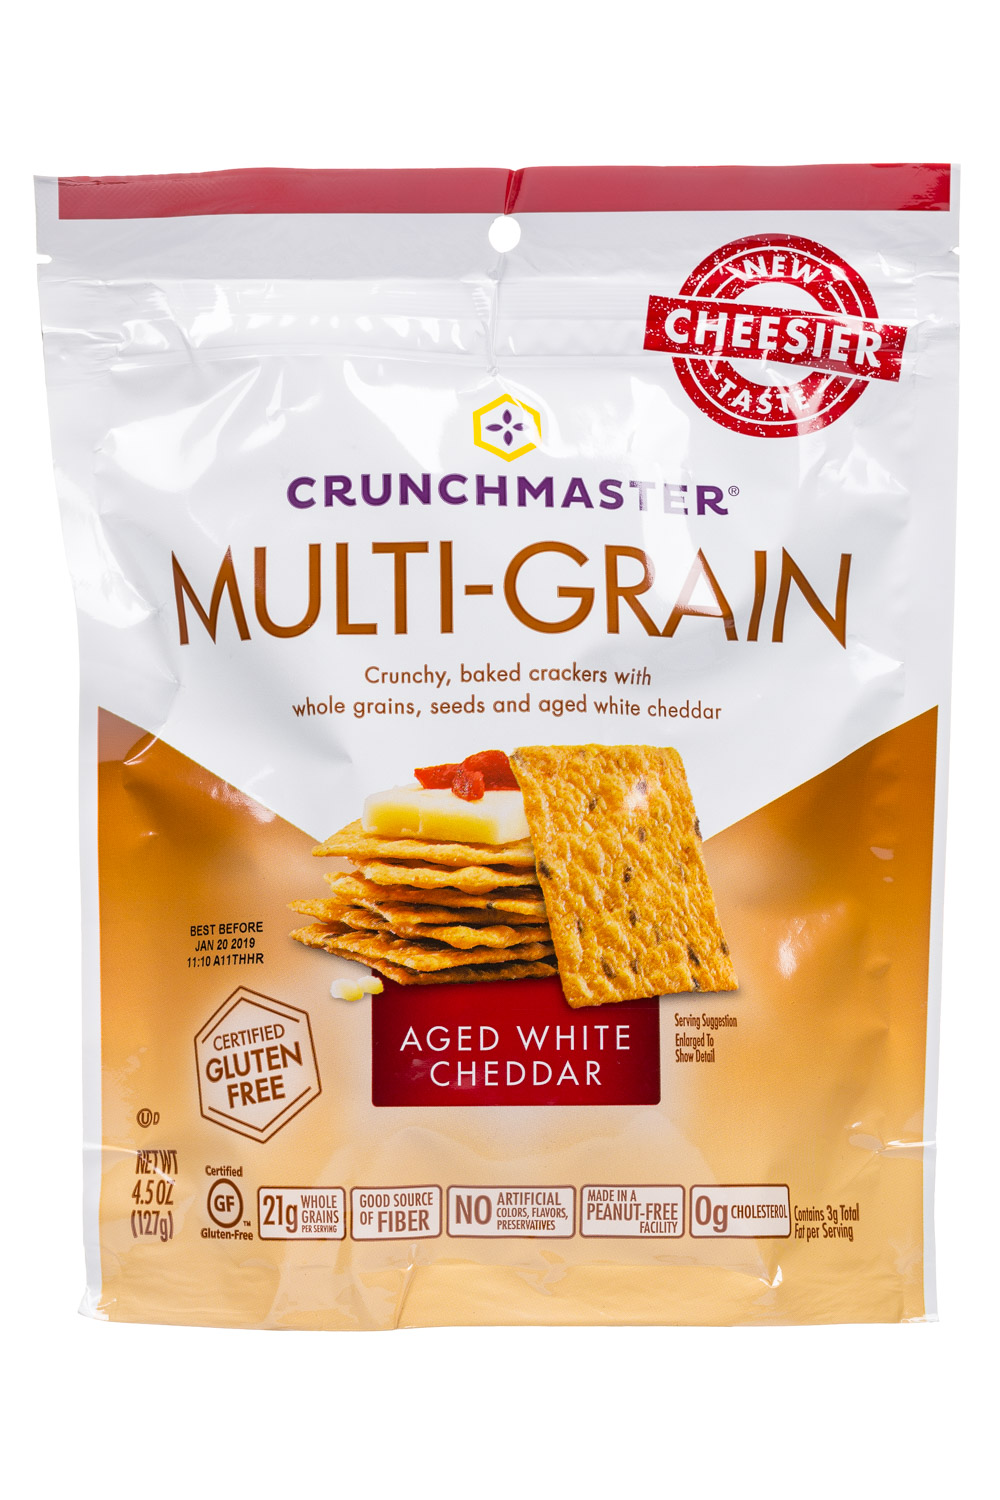 Multi-Grain: Aged White Cheddar